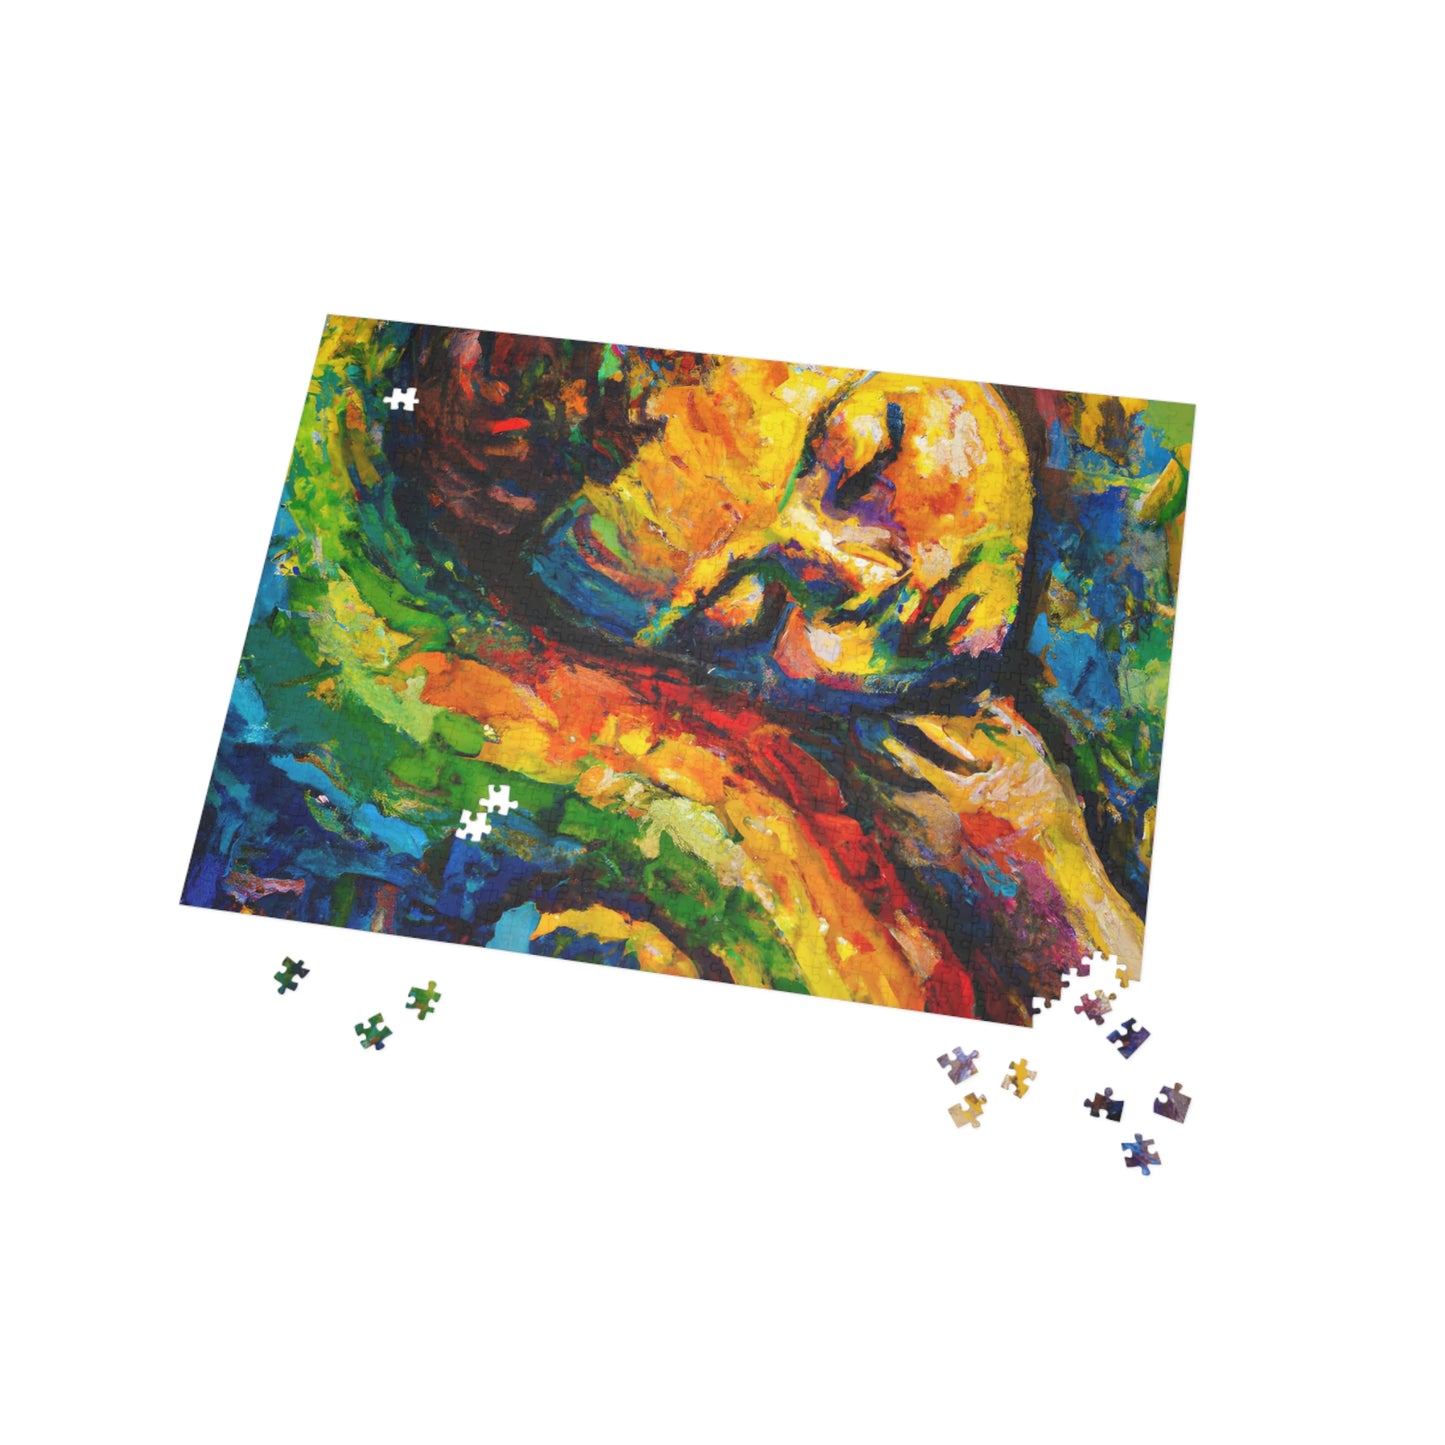 Amicris - LGBTQ-Inspired Jigsaw Puzzle